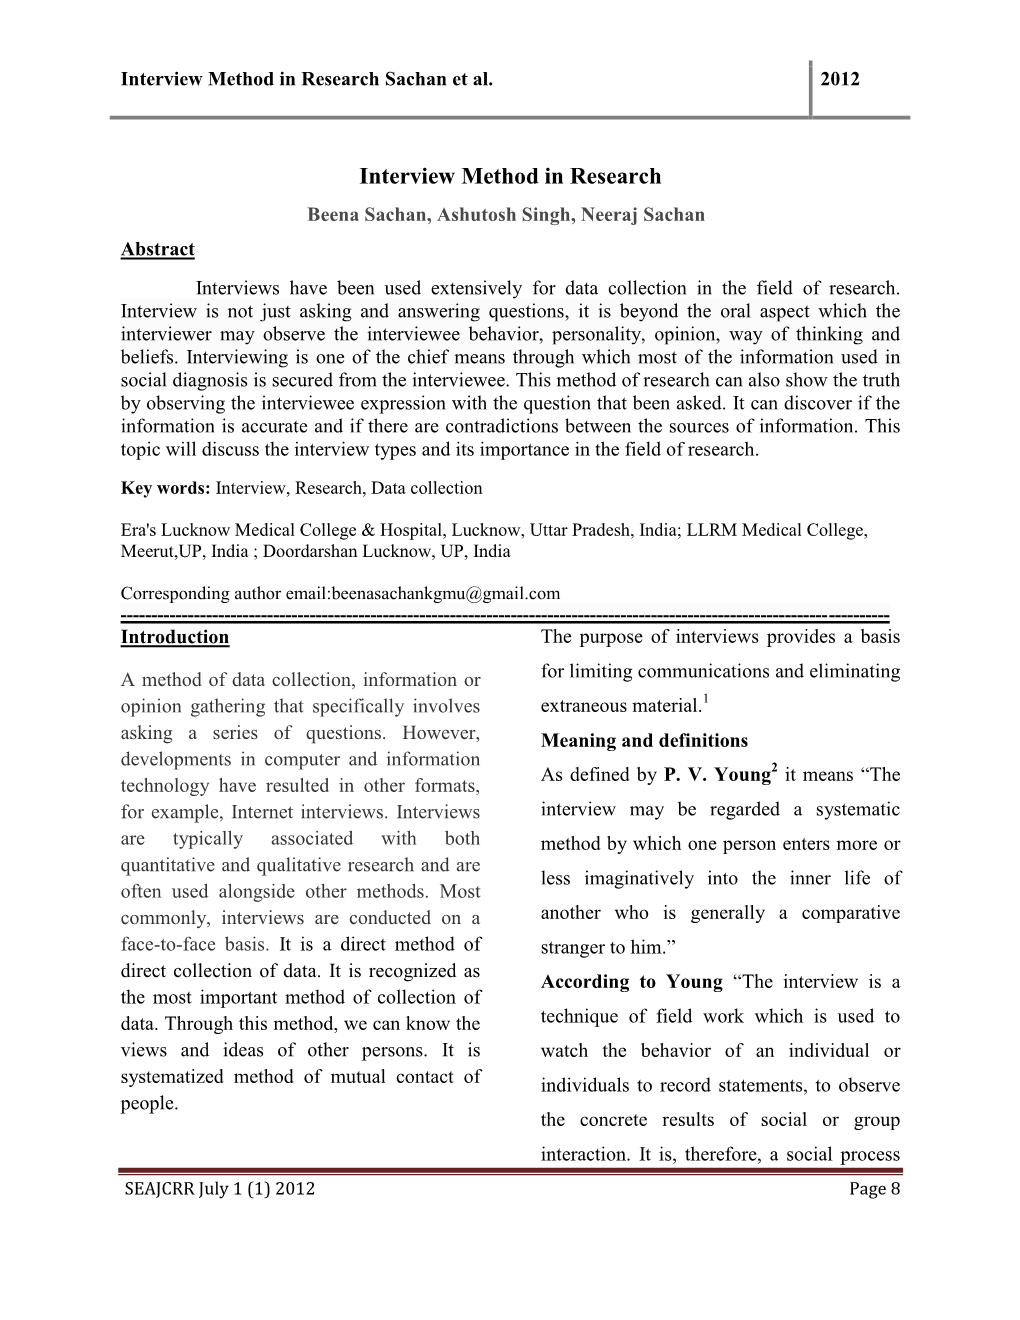 Interview Method in Research Sachan Et Al. 2012